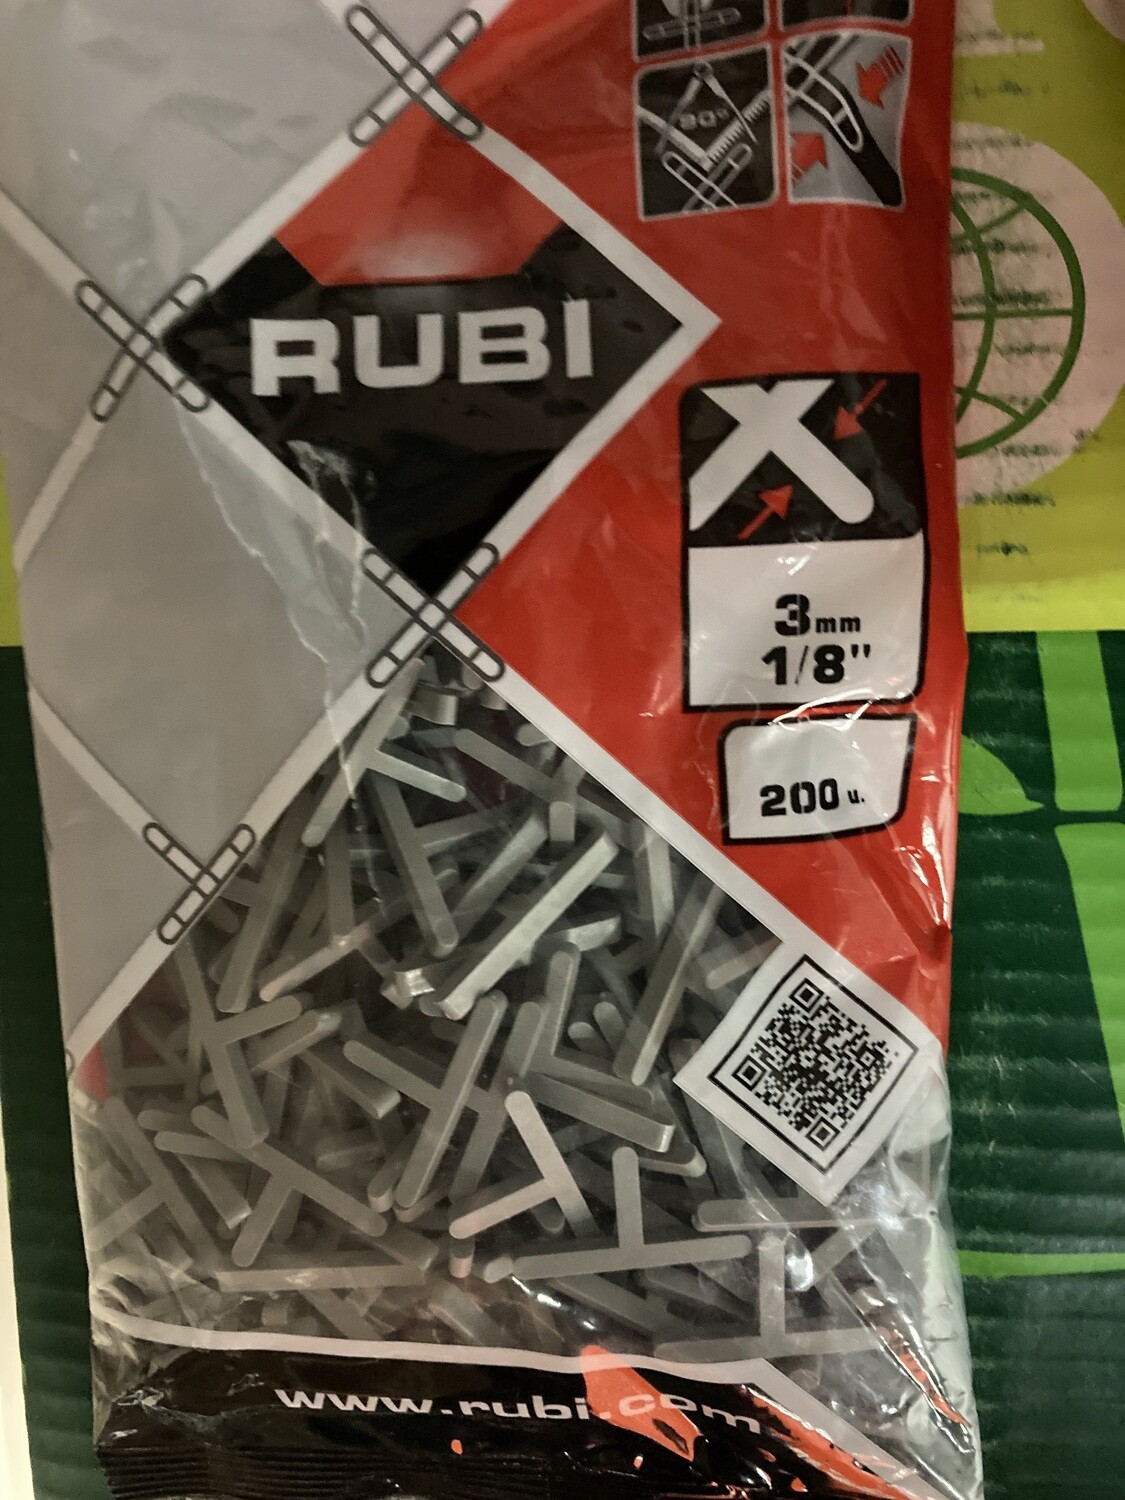 Rubi 3mm (1/8") Tile Spacers "T" shape, 3 bags of 200 #1268